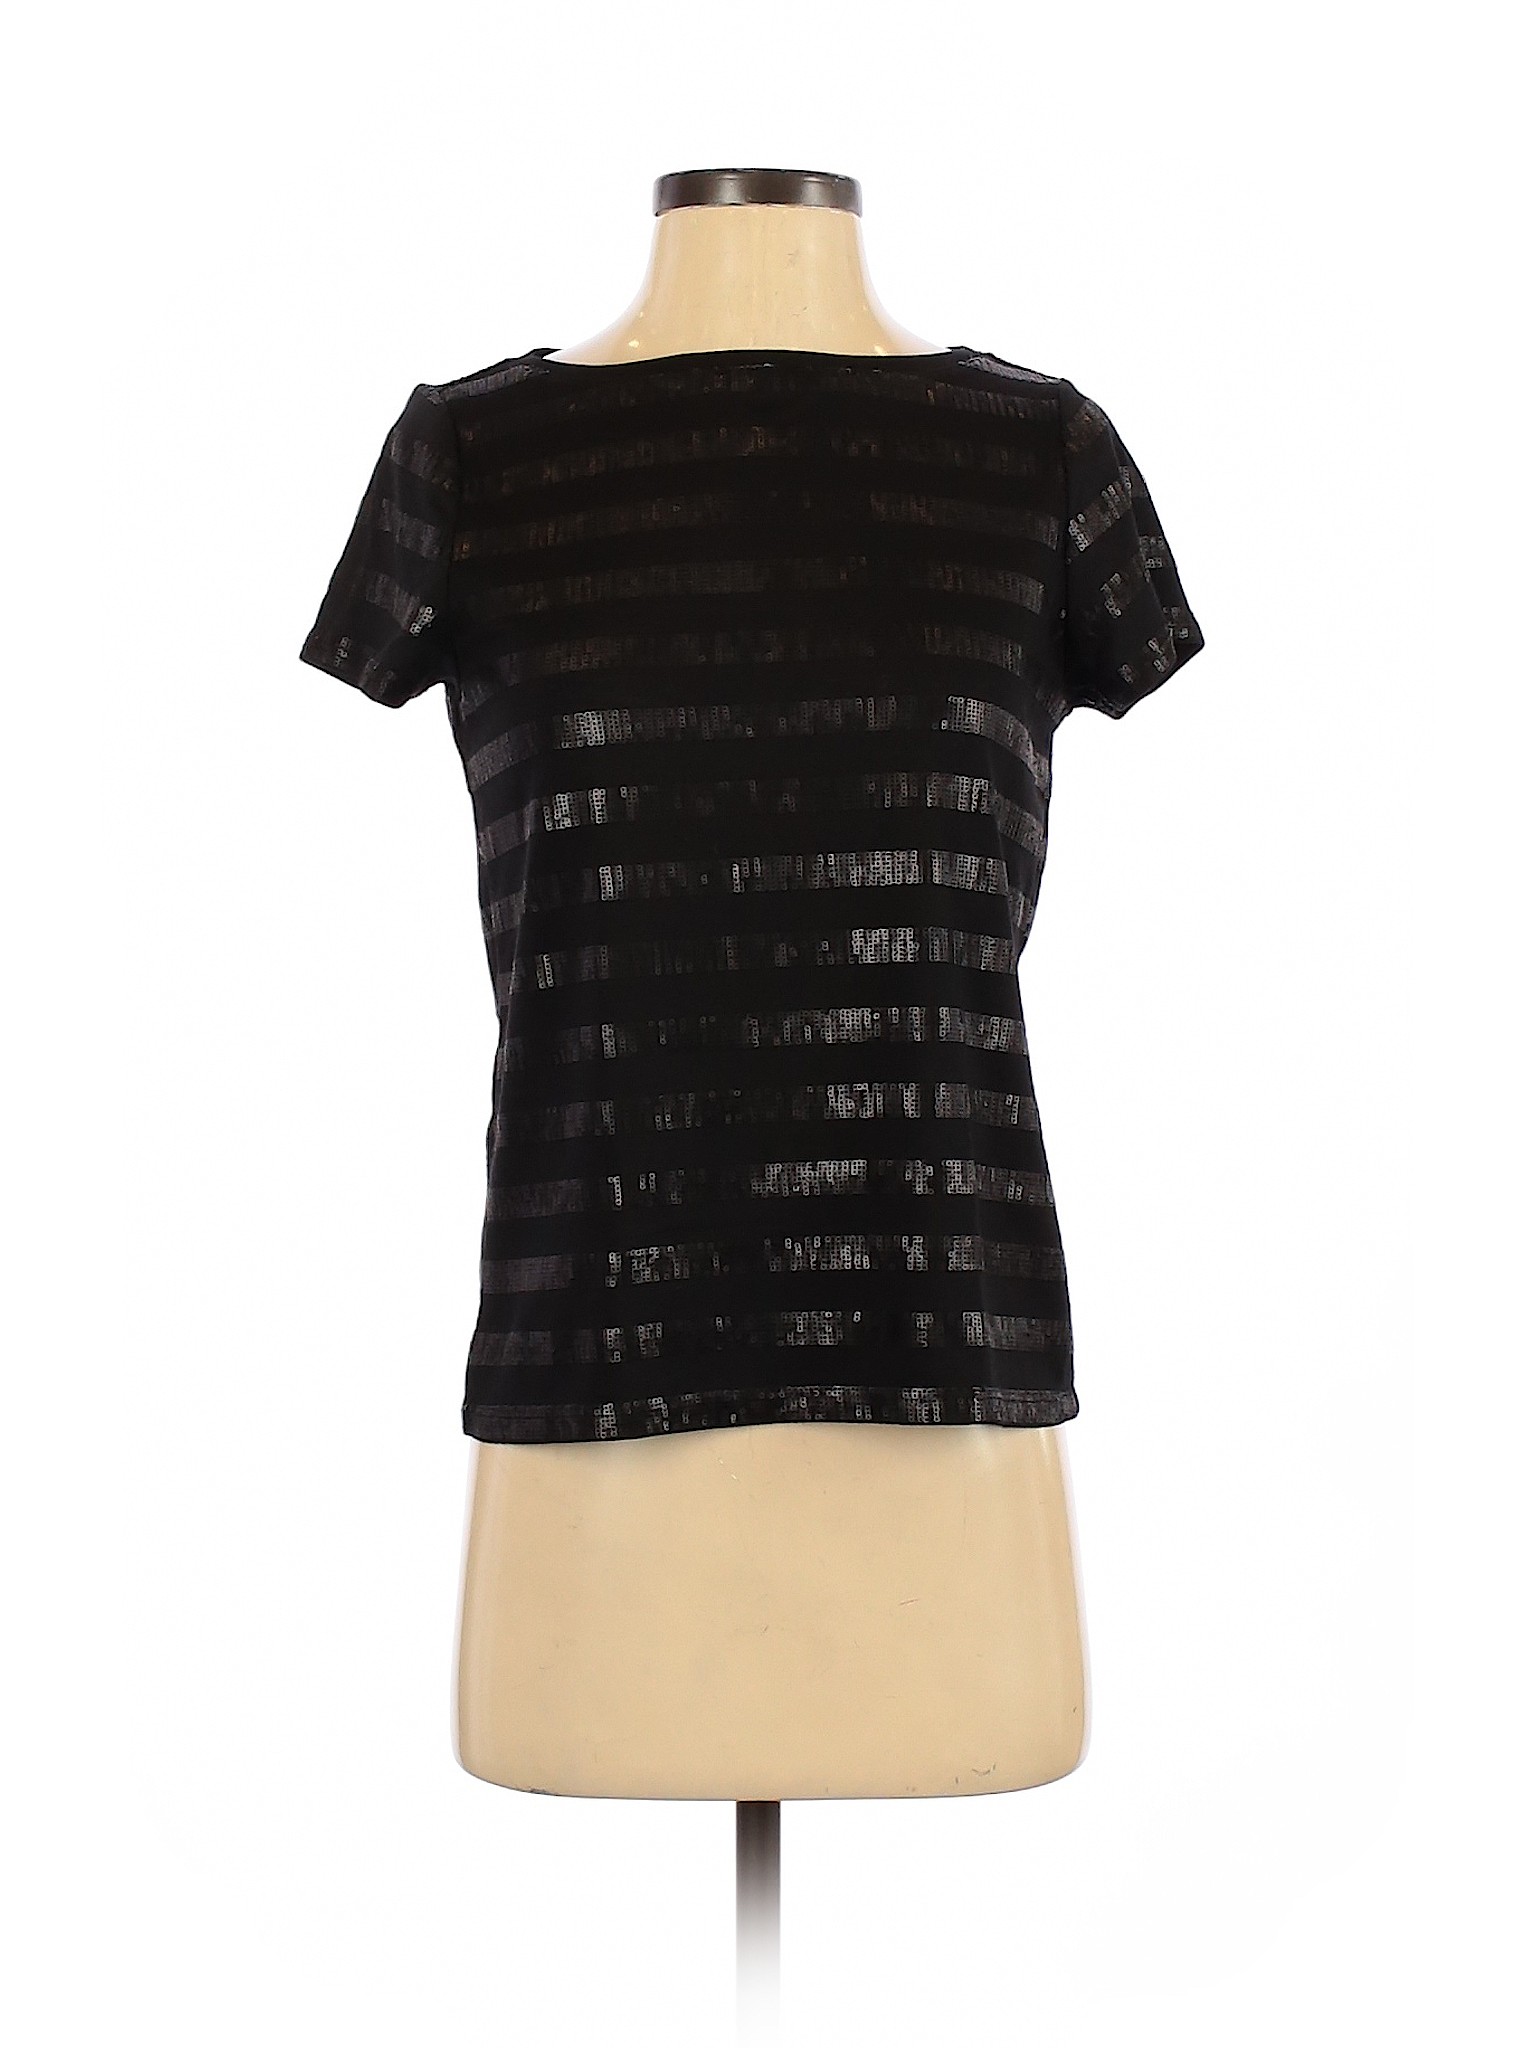 Talbots Women Black Short Sleeve T-Shirt S | eBay